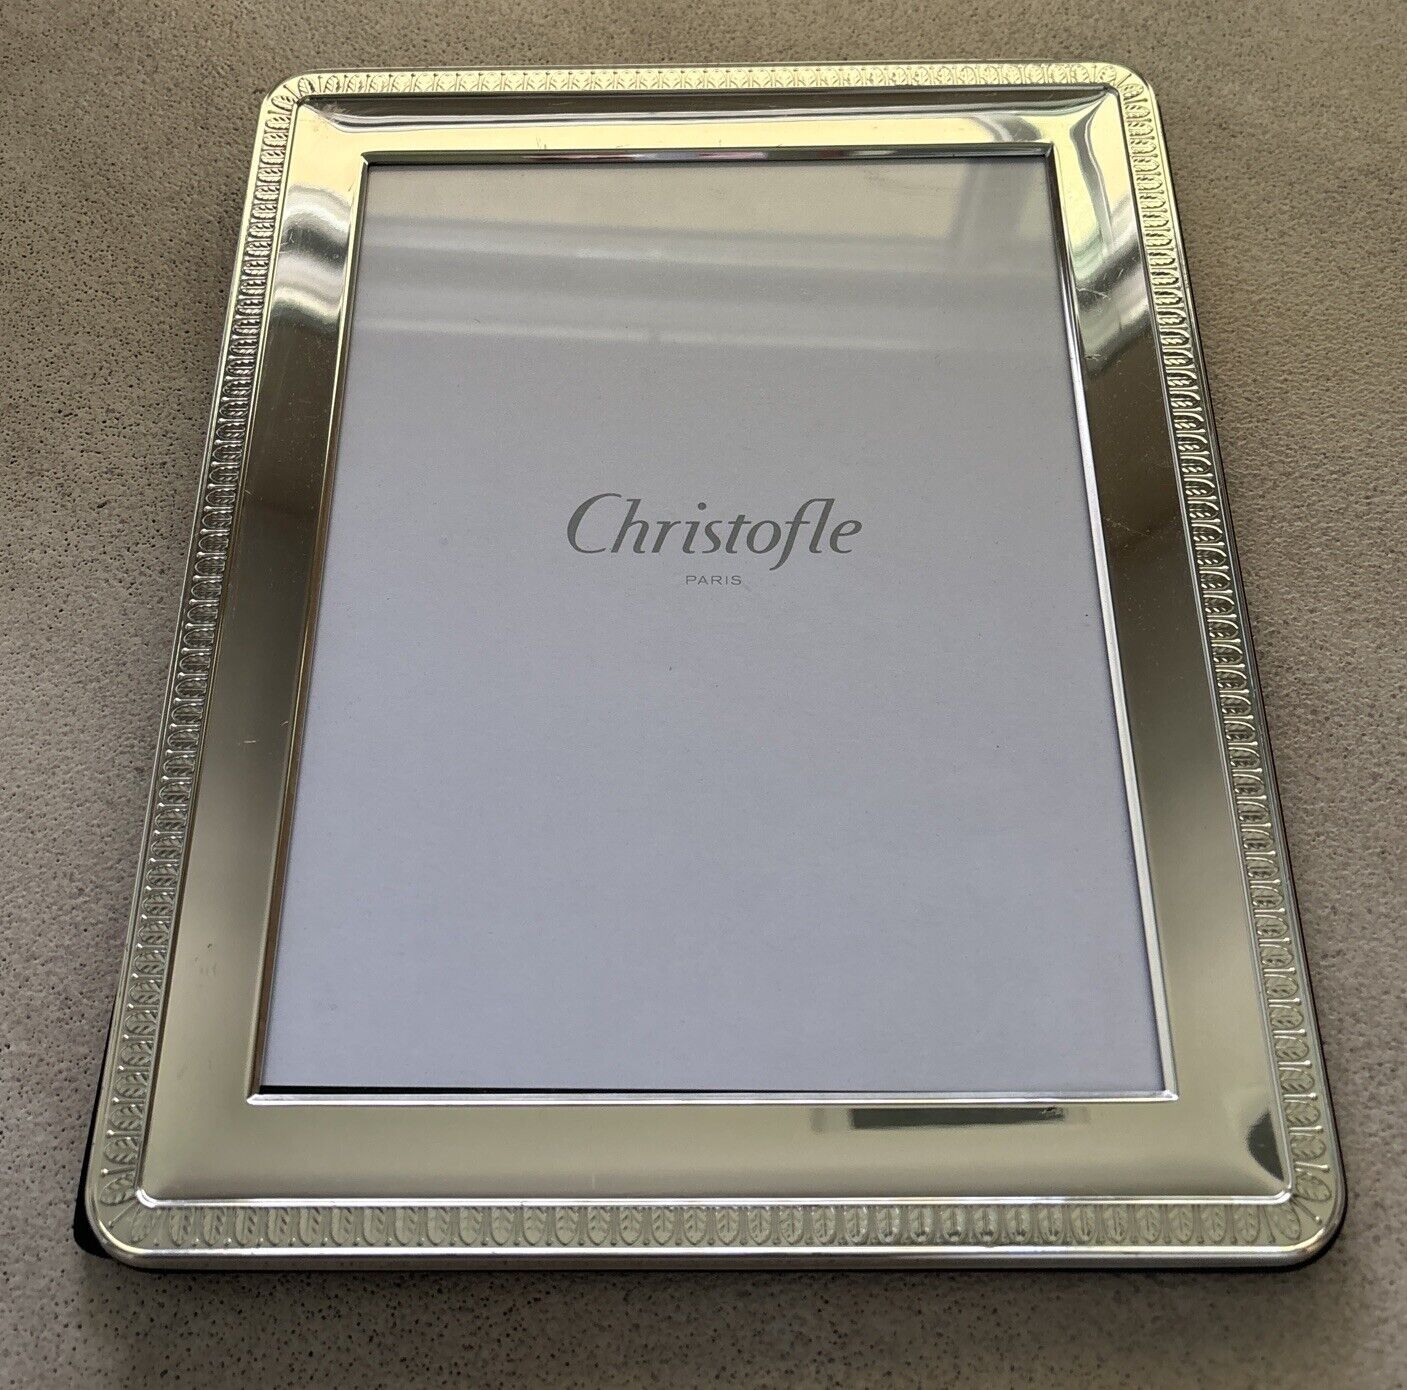 Christofle Paris France Silver Photo Picture Frame ”7 X 10” Inside Photo